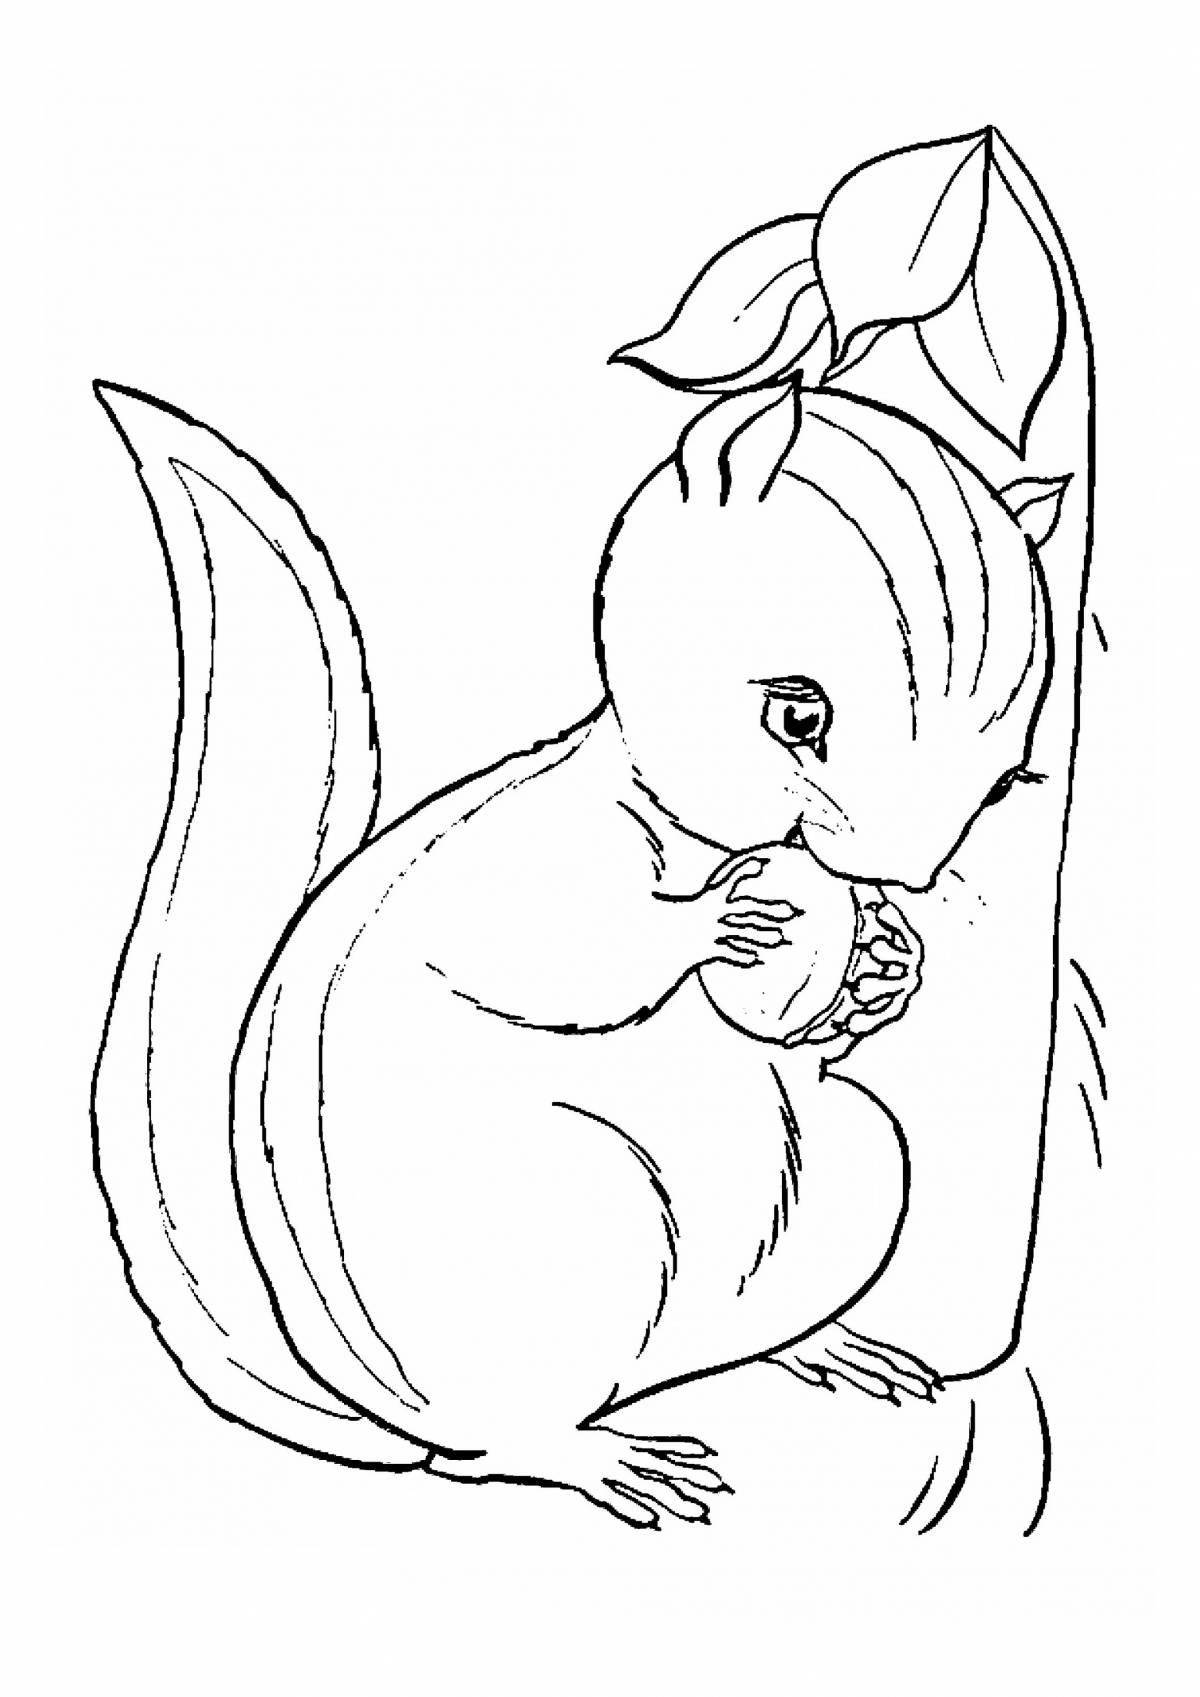 Fun drawing of a squirrel